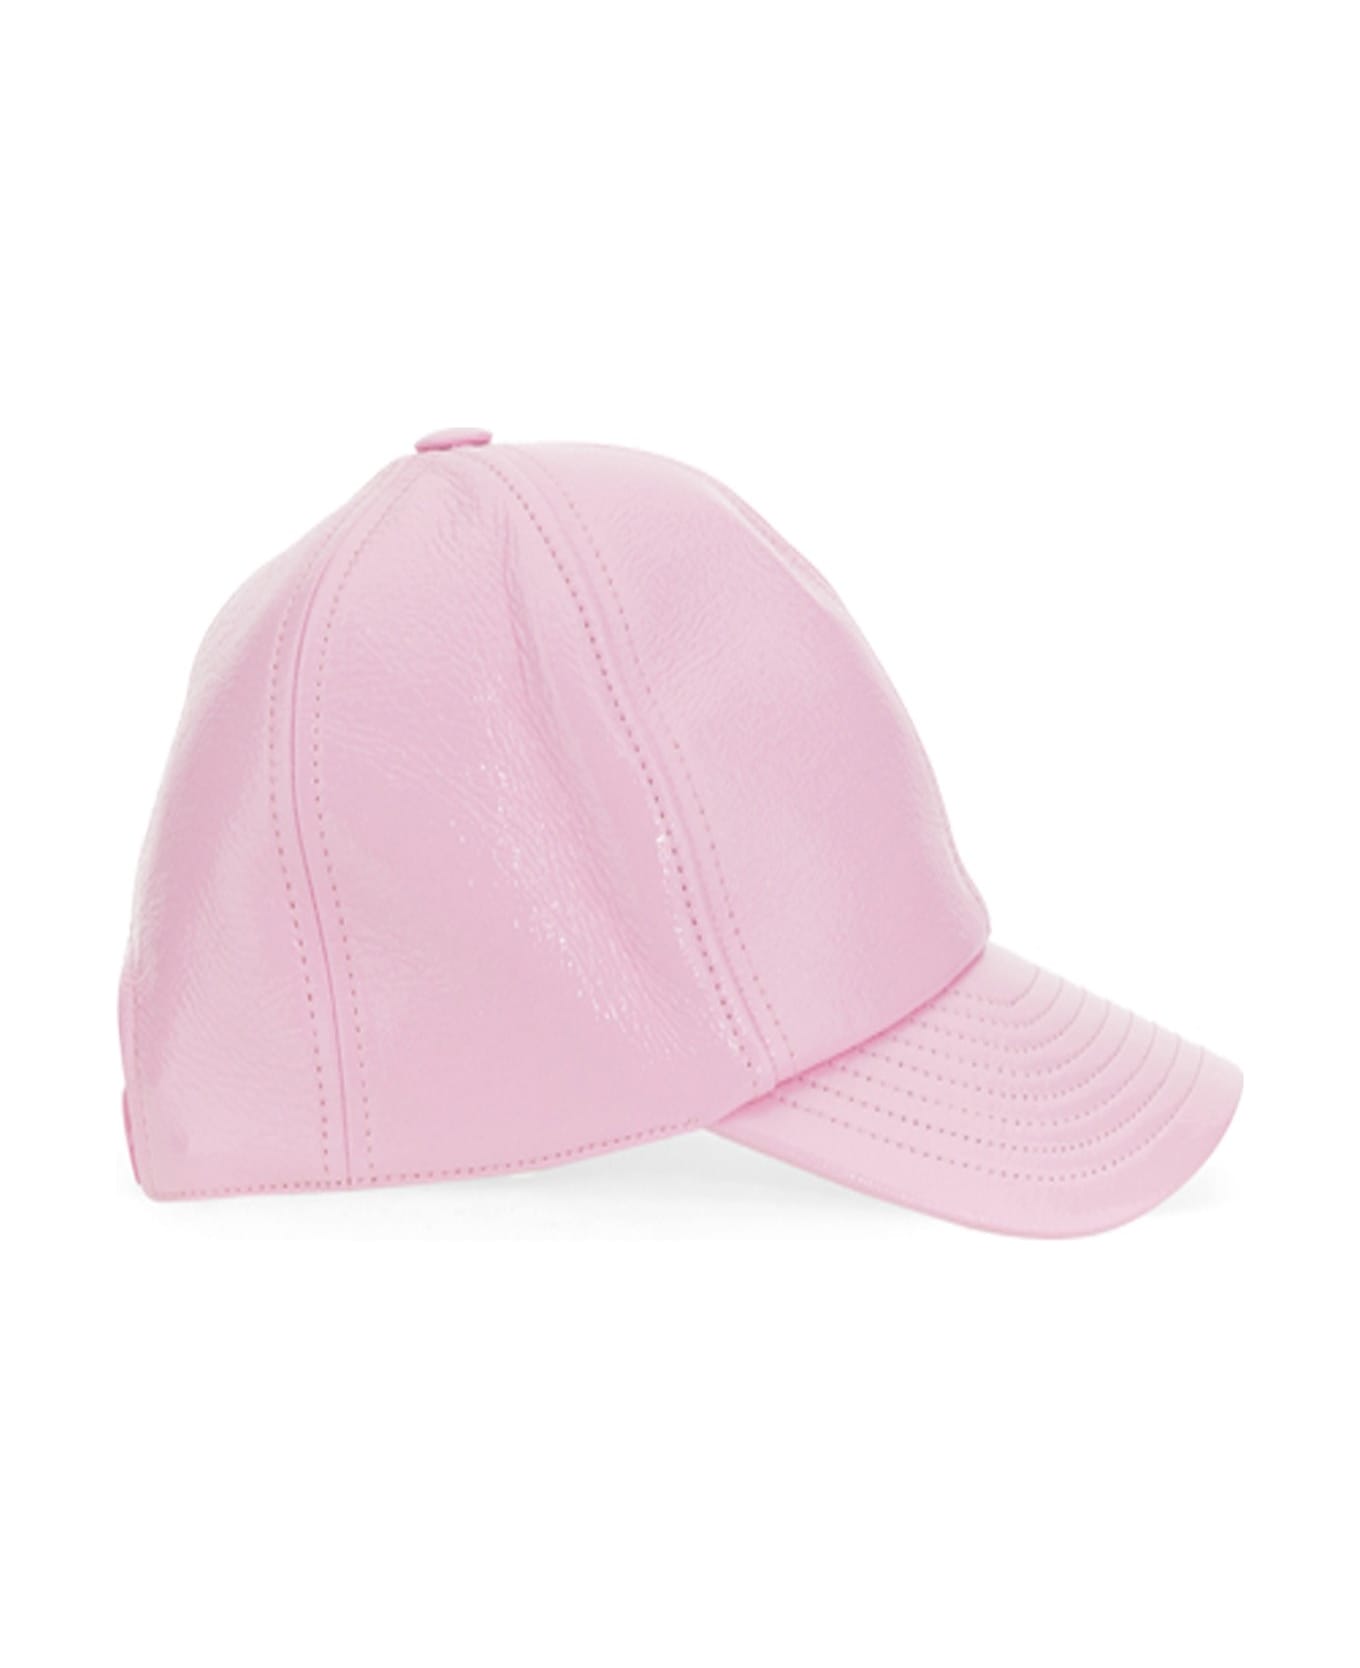 Courrèges Baseball Cap - Pink 帽子